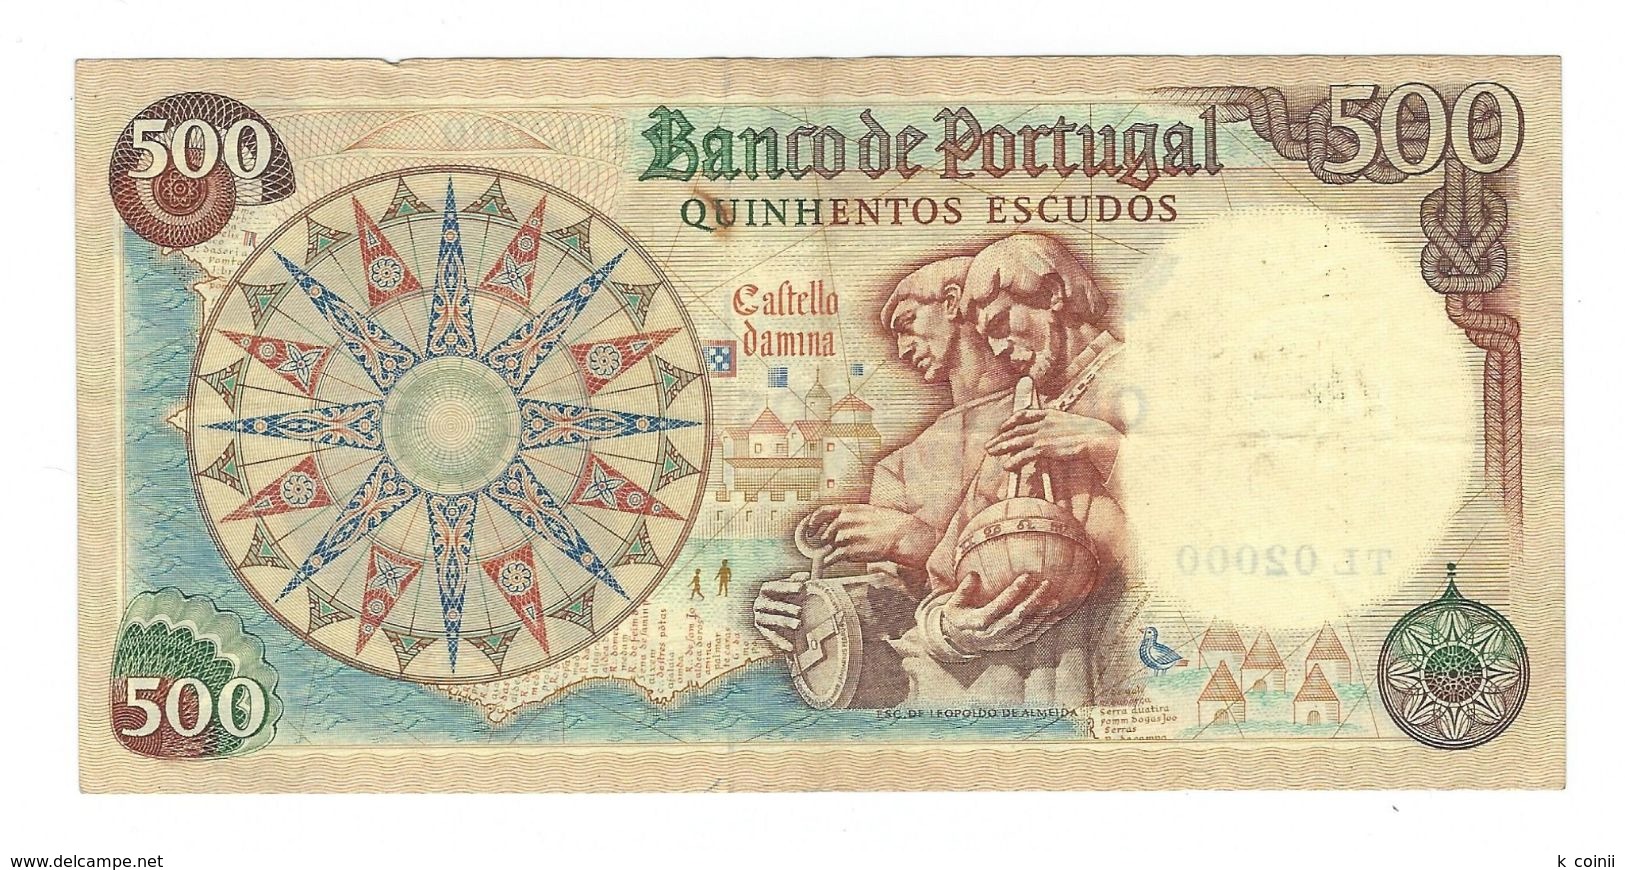 Portugal - 500 Escudos (500$00) 1966 - Very Fine VF - Portugal